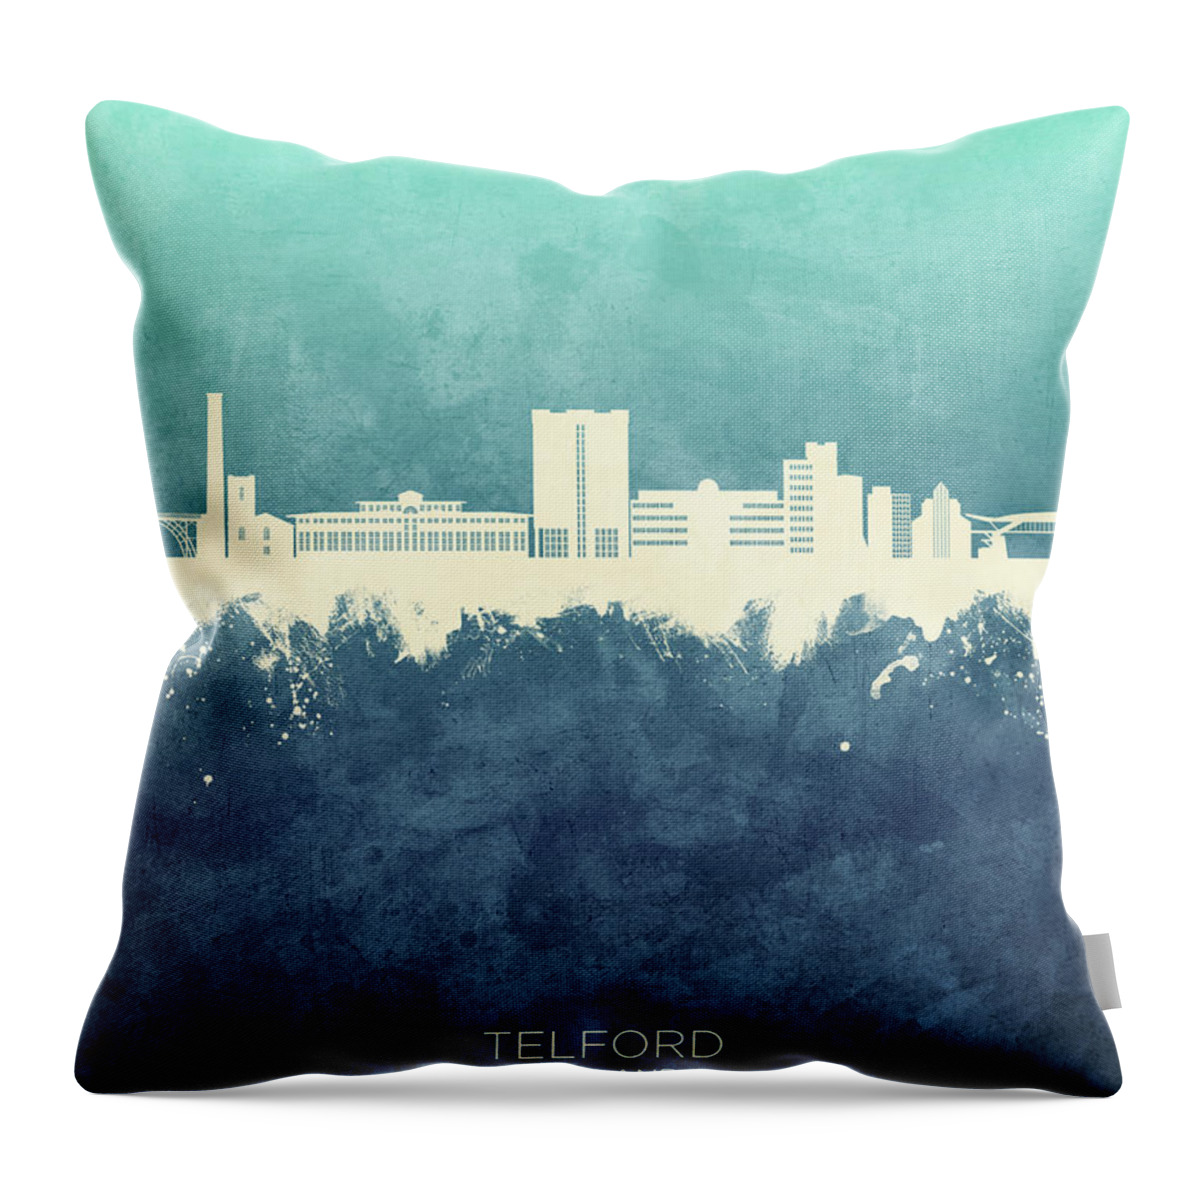 Telford Throw Pillow featuring the digital art Telford England Skyline #30 by Michael Tompsett